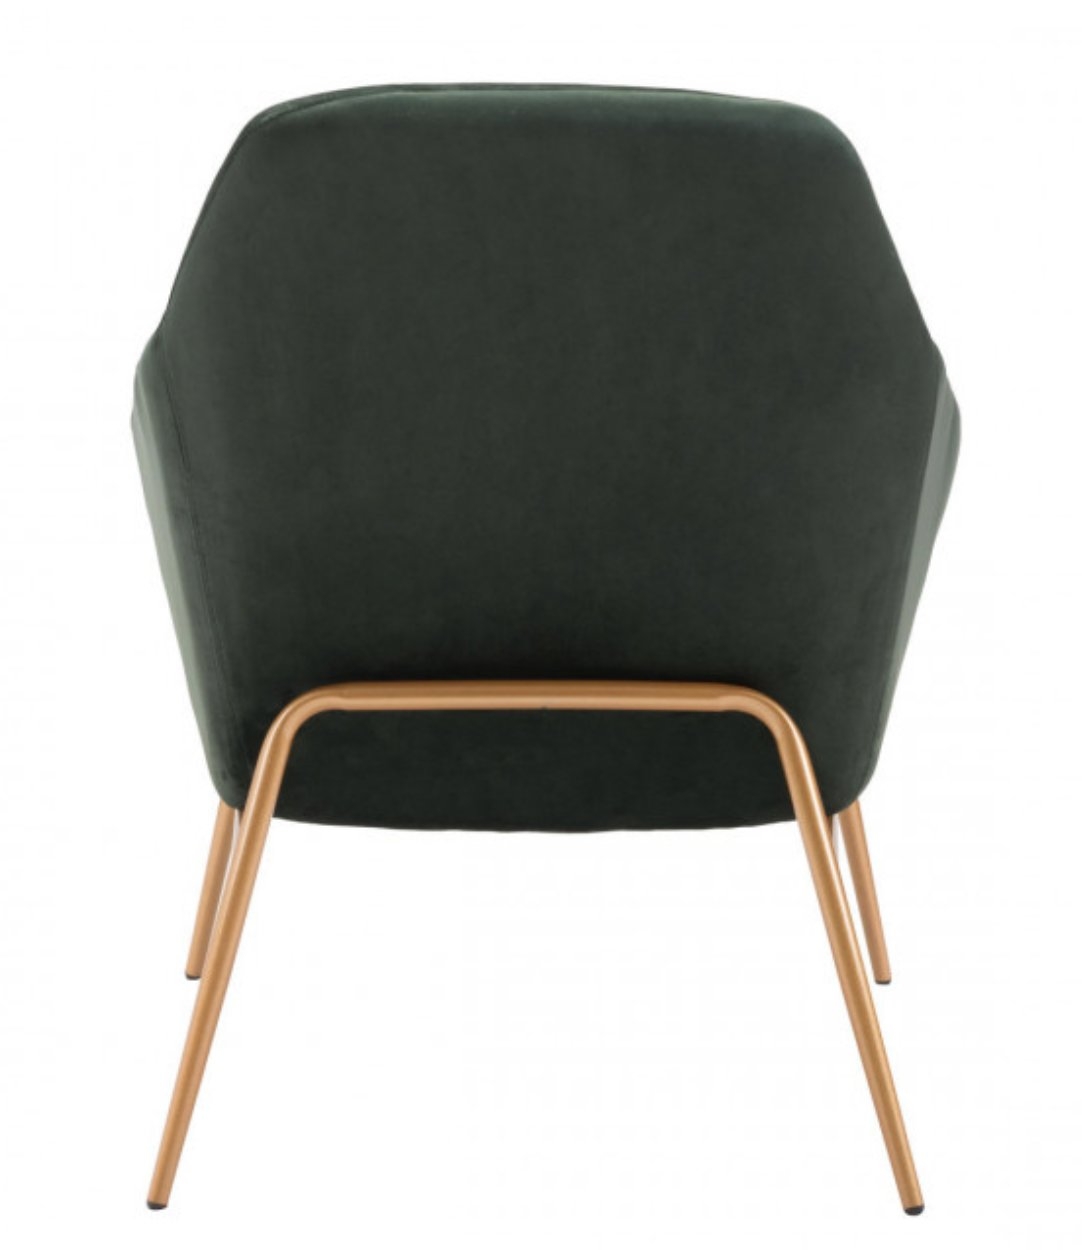 Debonair Arm Chair, Green Velvet - Image 1